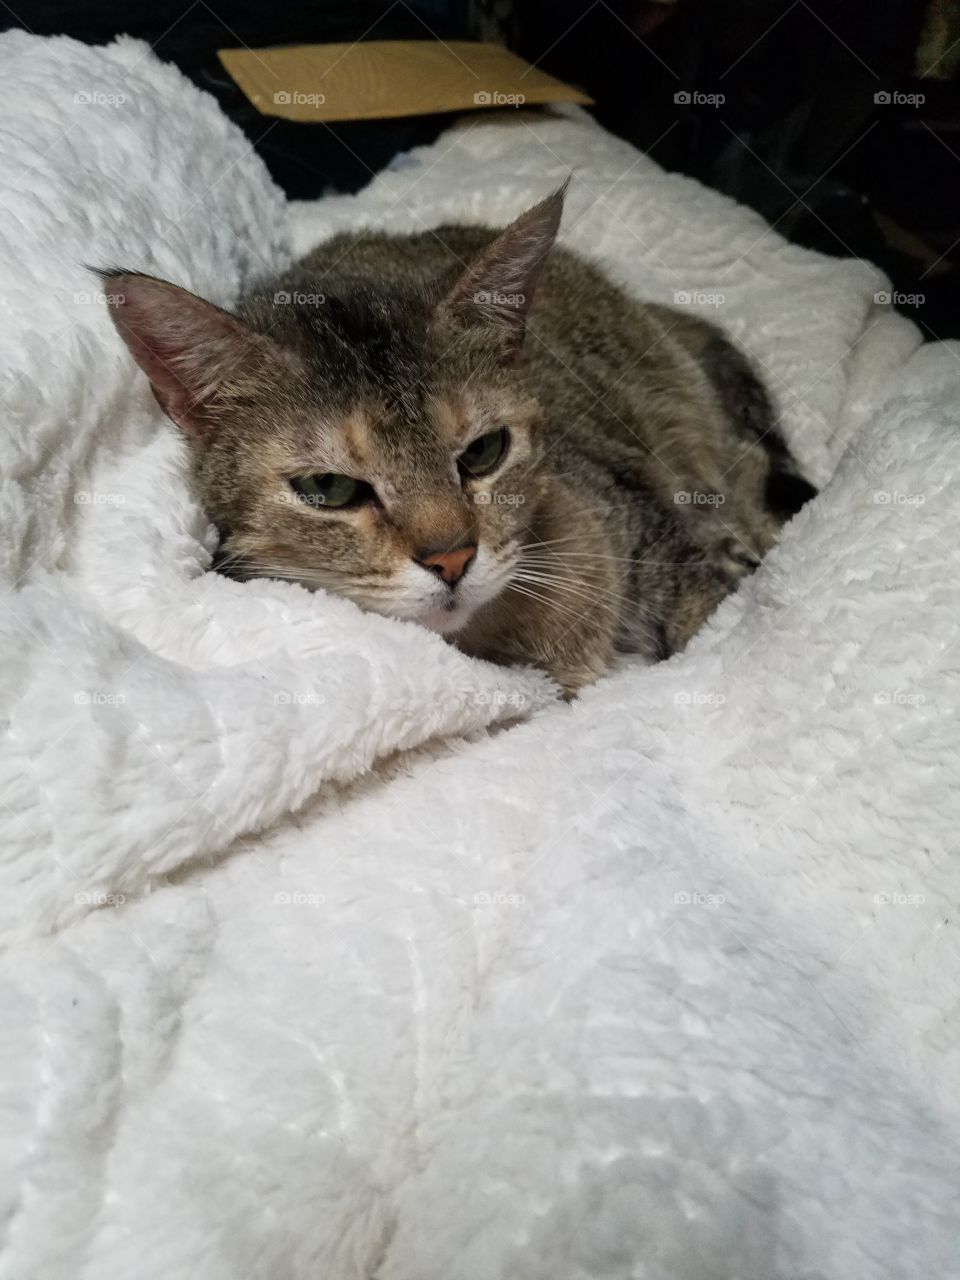 Tired kitty snuggled in a blanket.